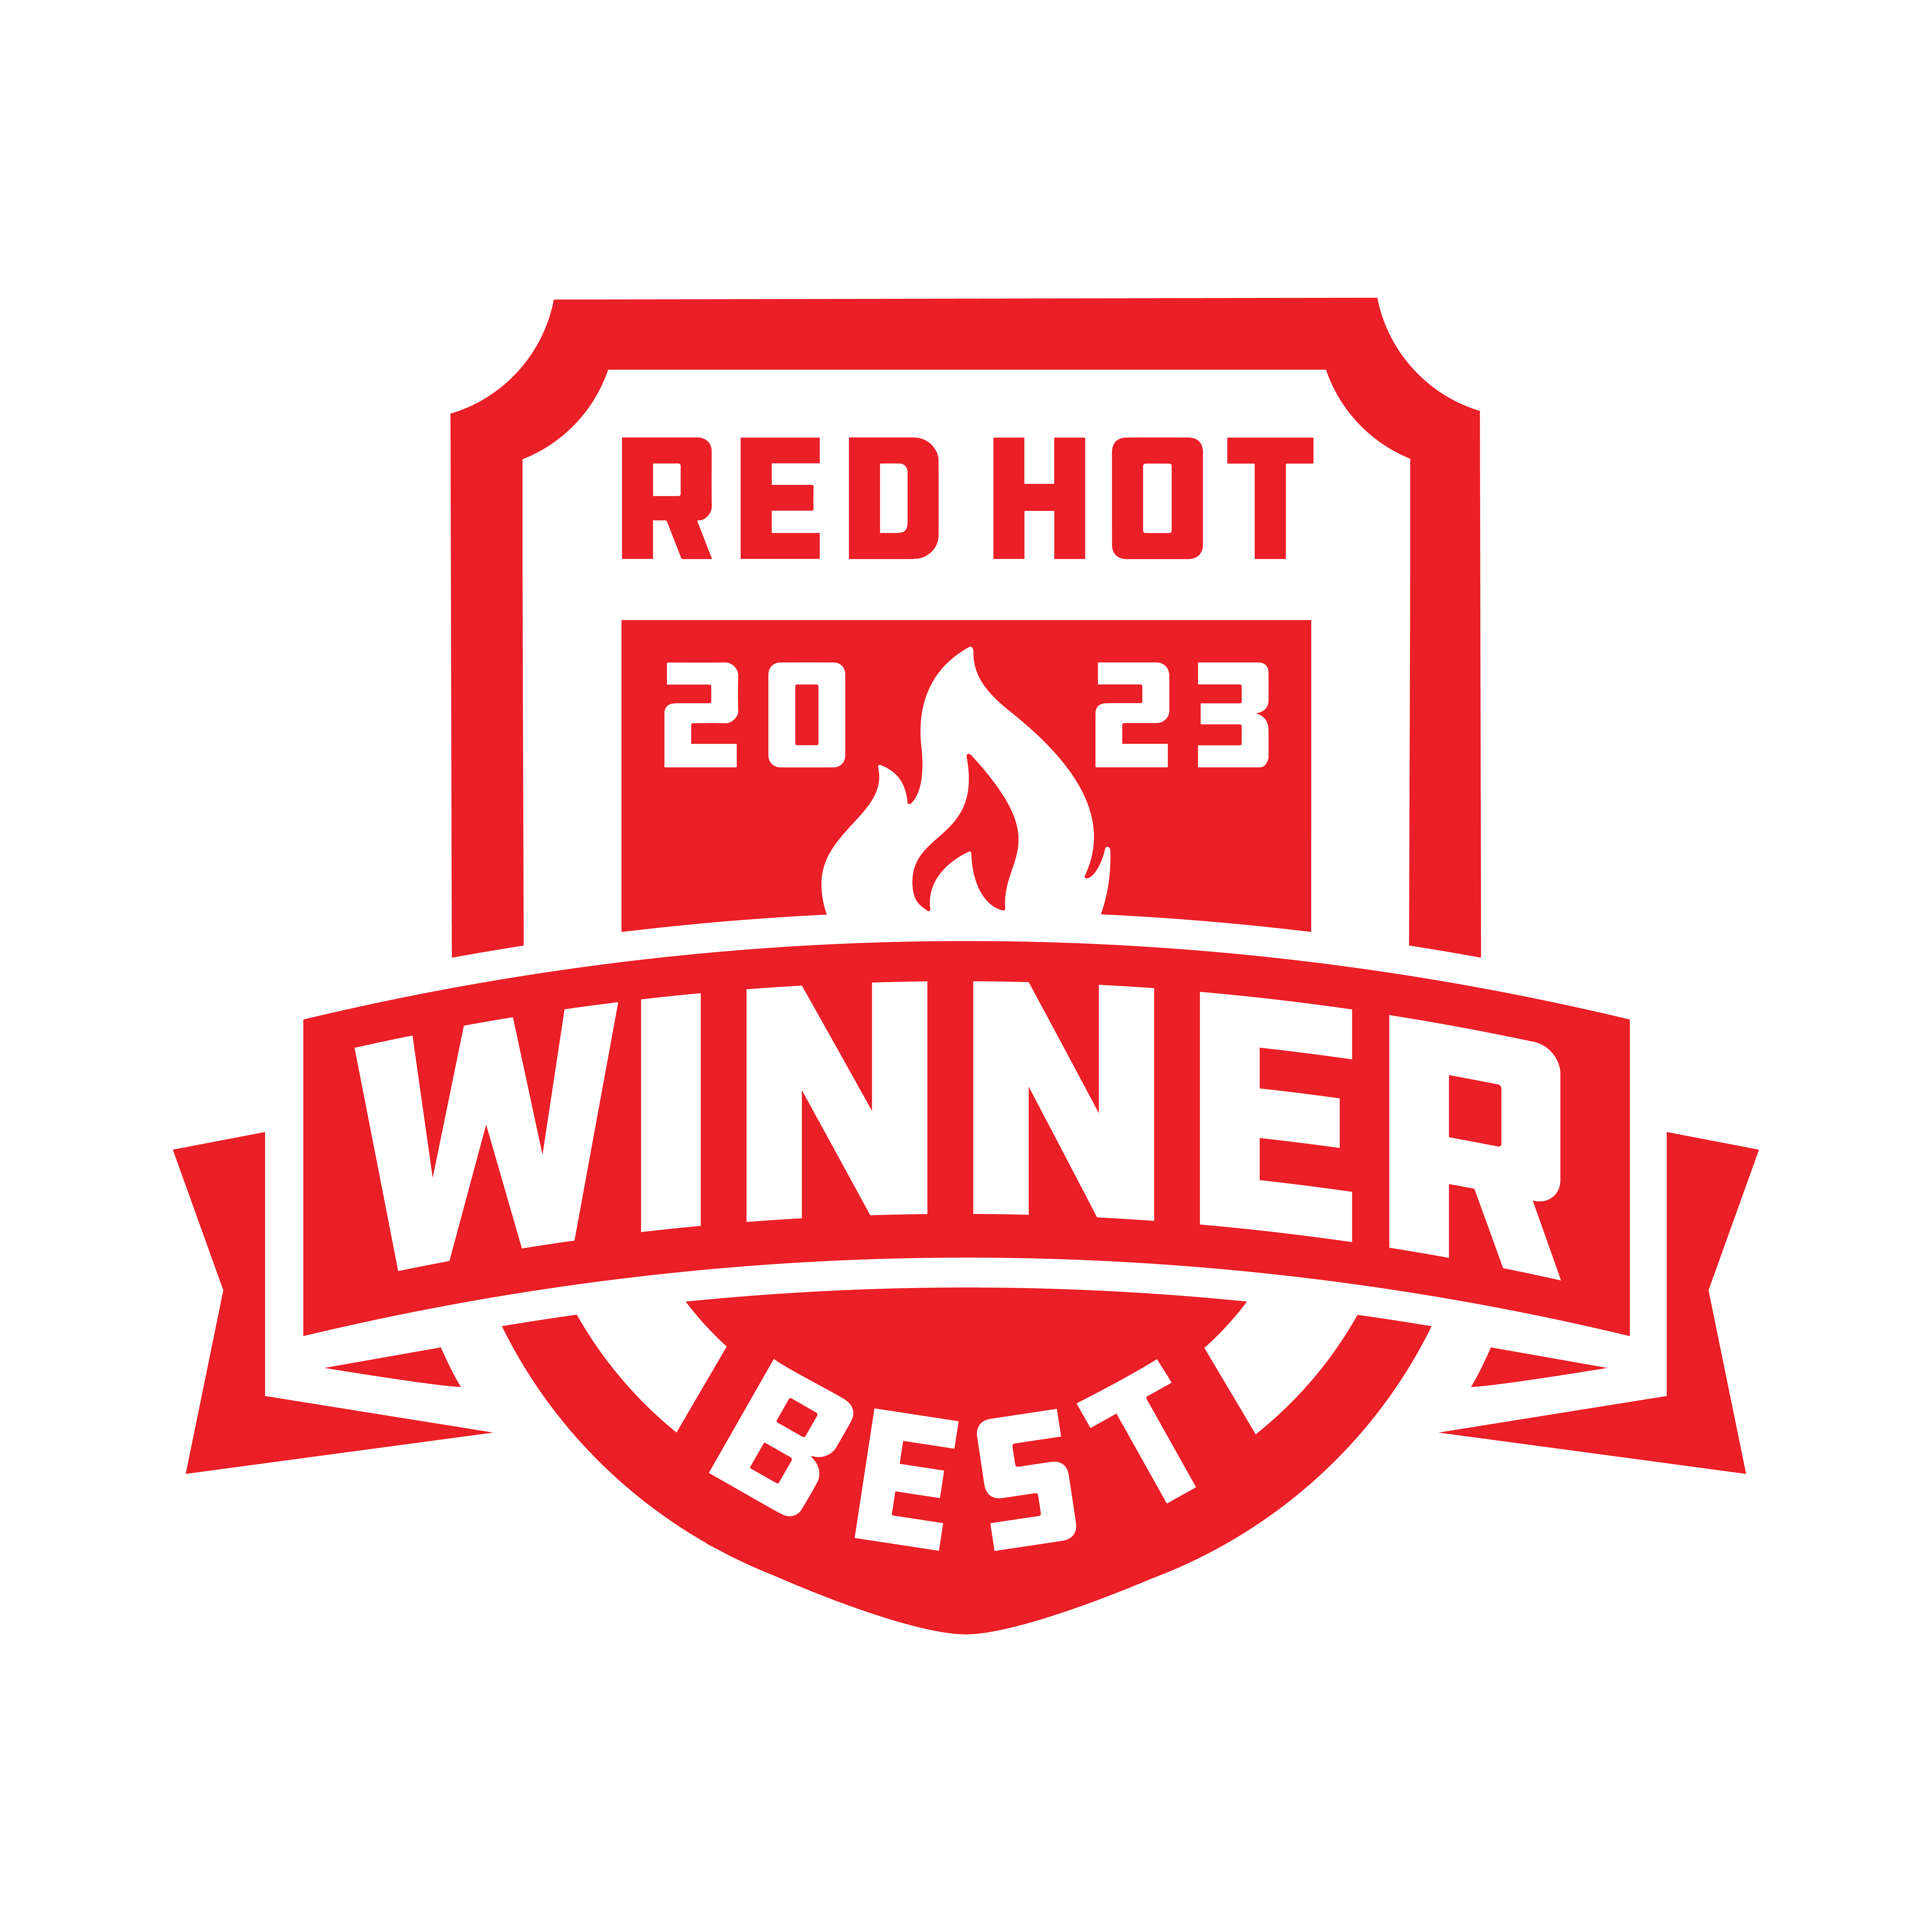 2023 Red Hot Best Winner